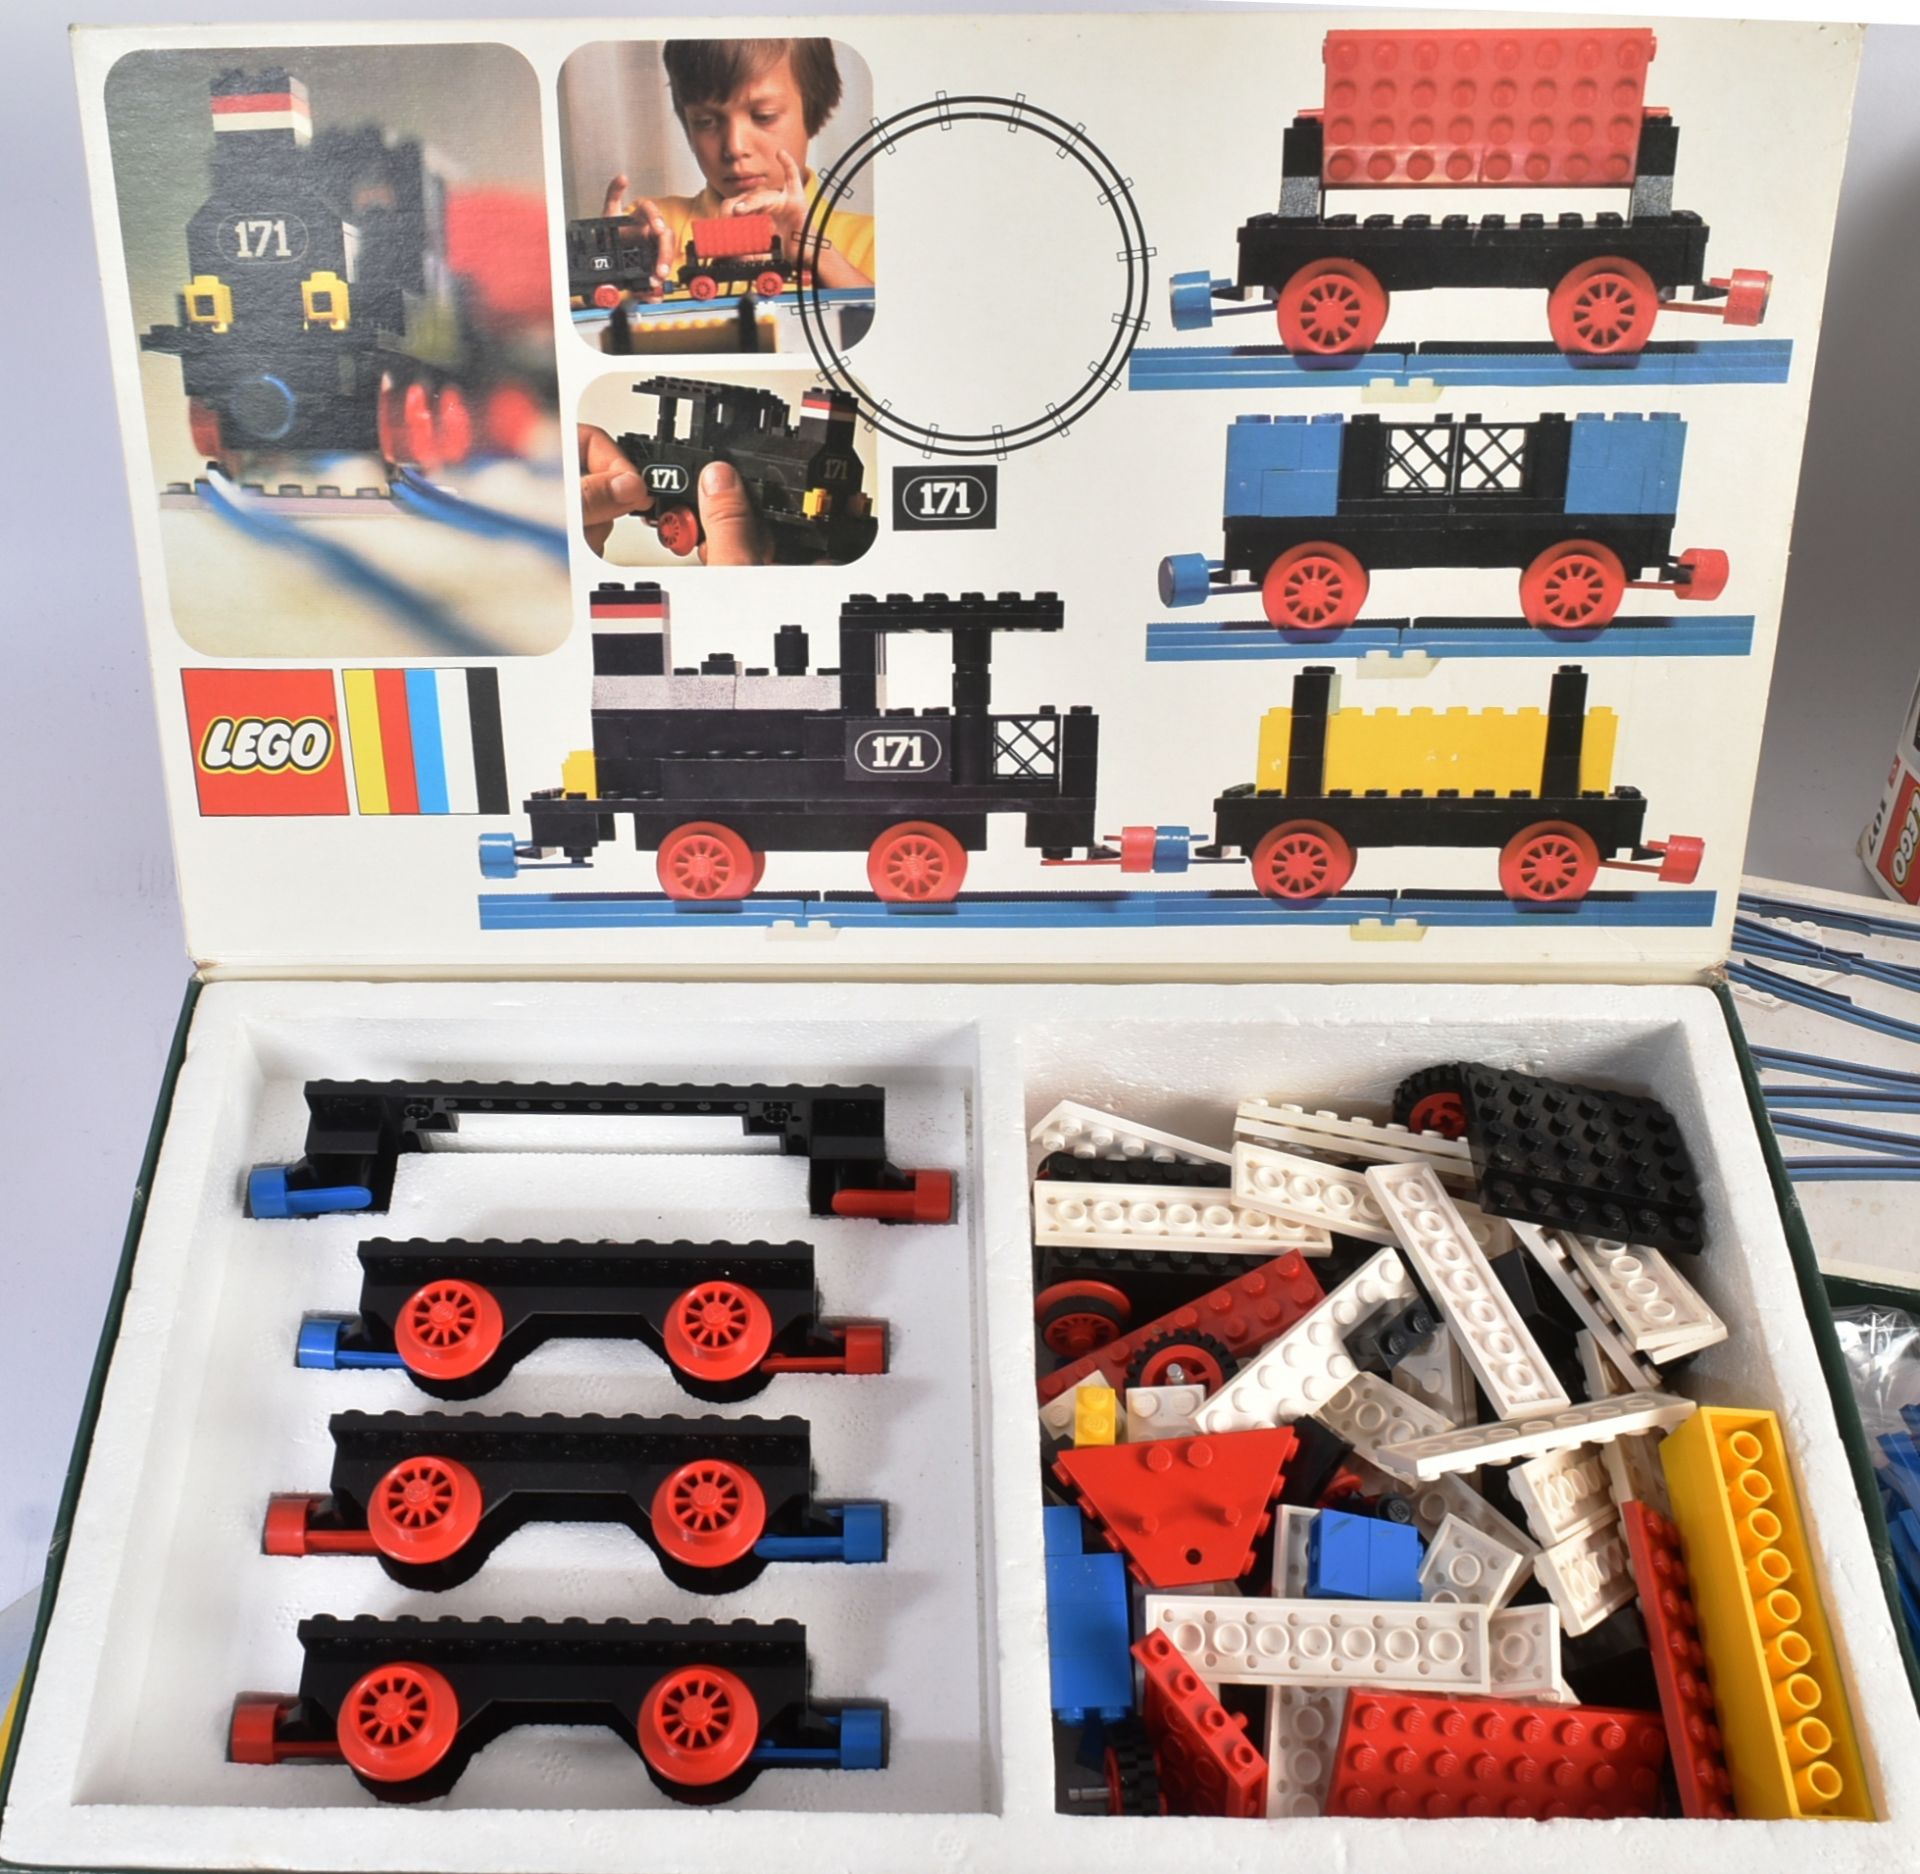 LEGO - COLLECTION OF VINTAGE LEGO SETS & LOOSE BRICKS - Image 5 of 6